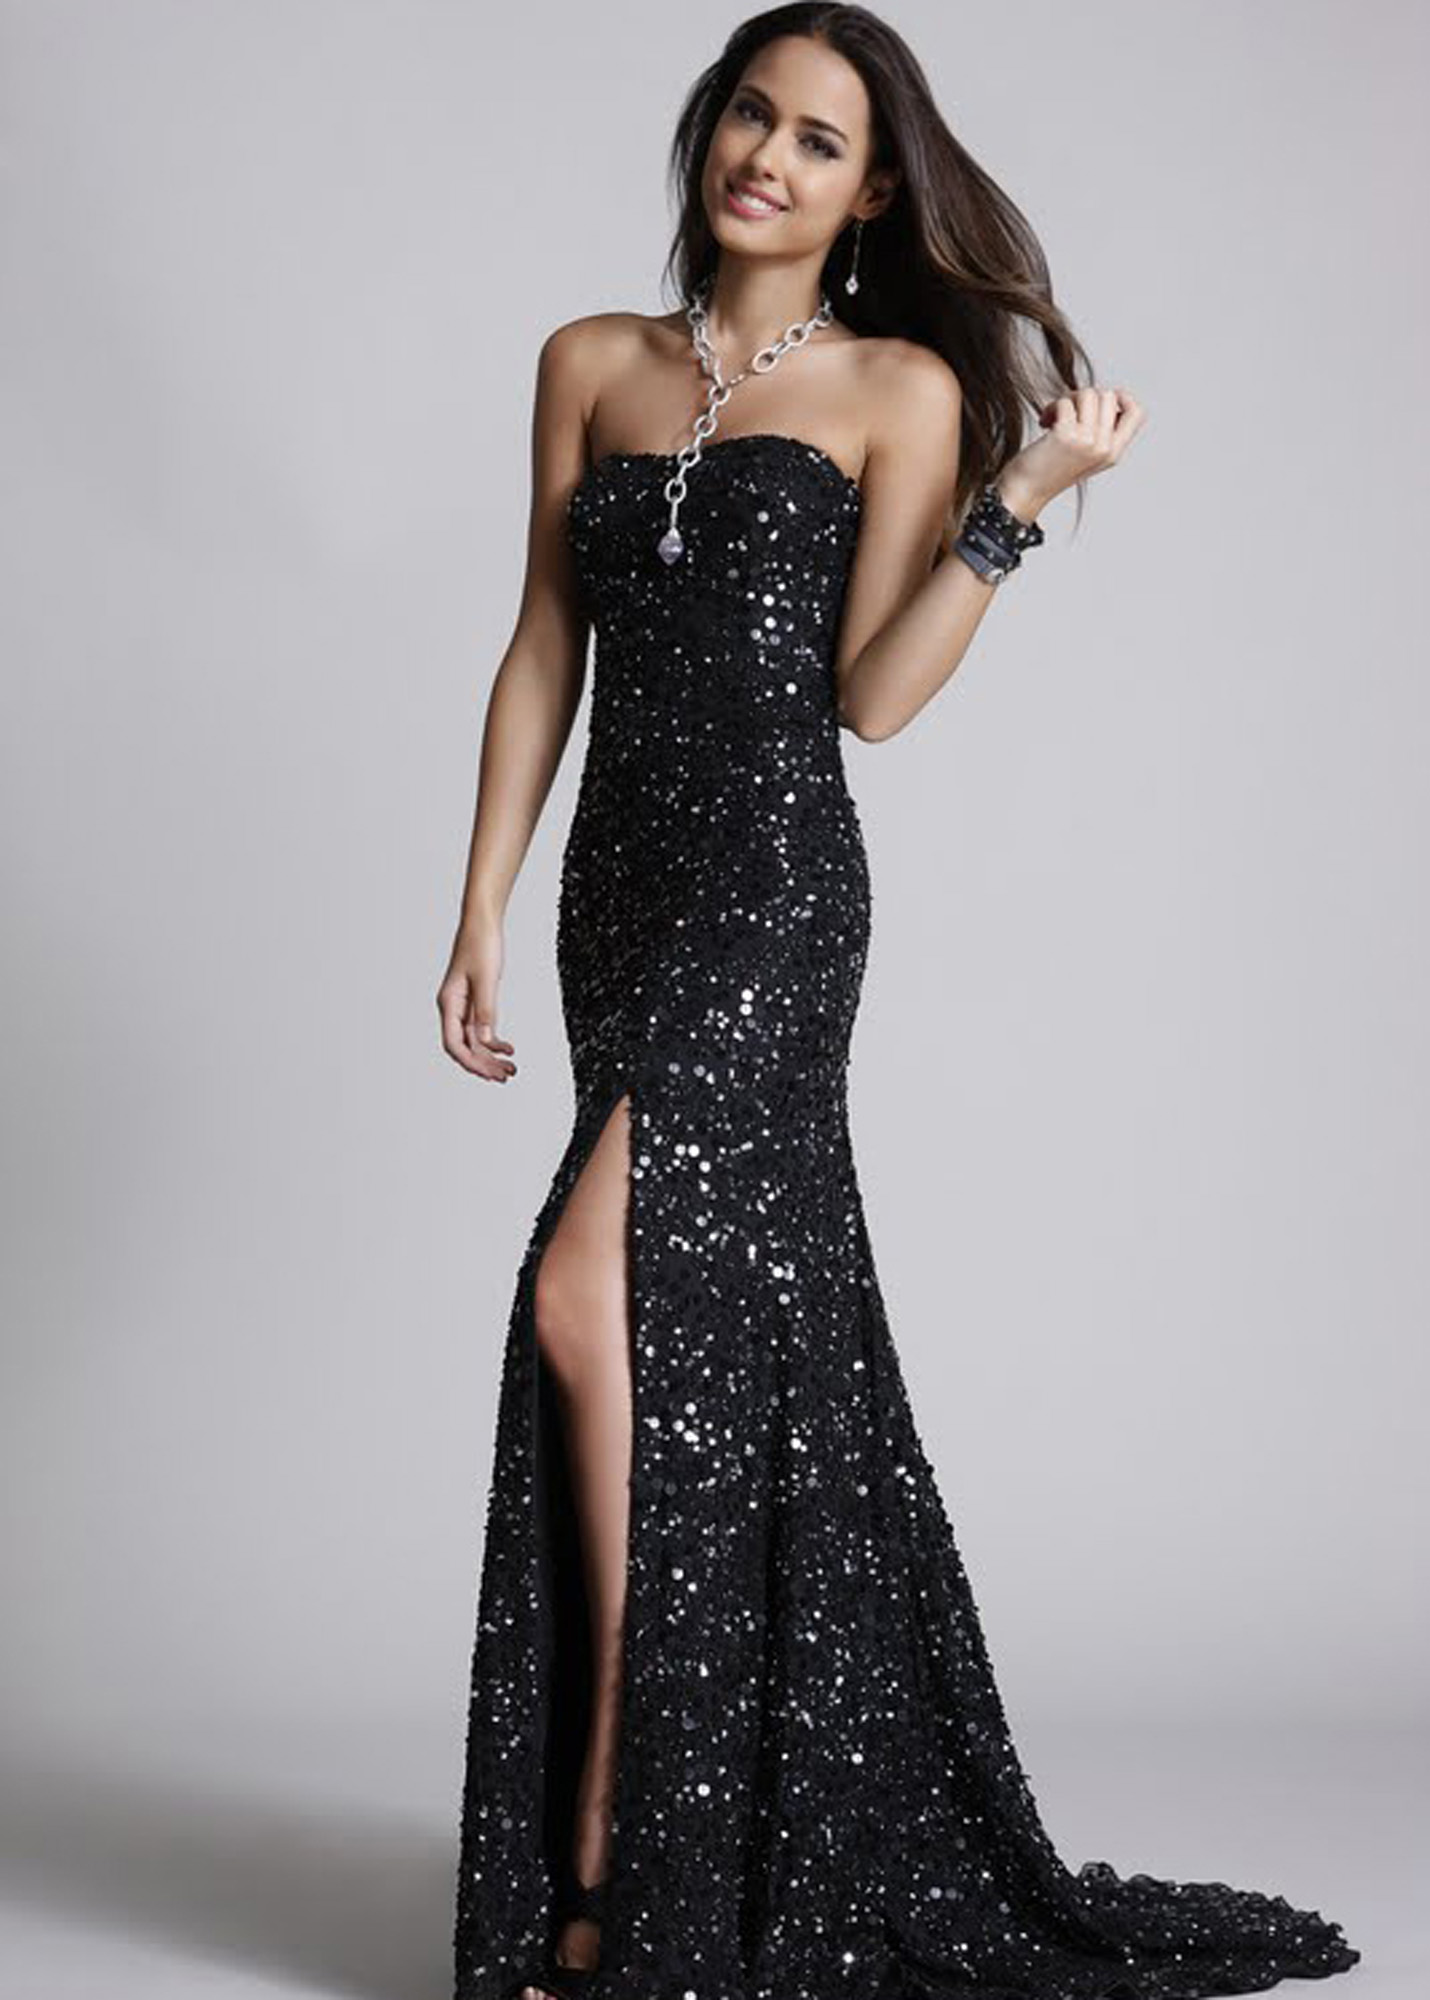 Black Prom Dresses | DressedUpGirl.com